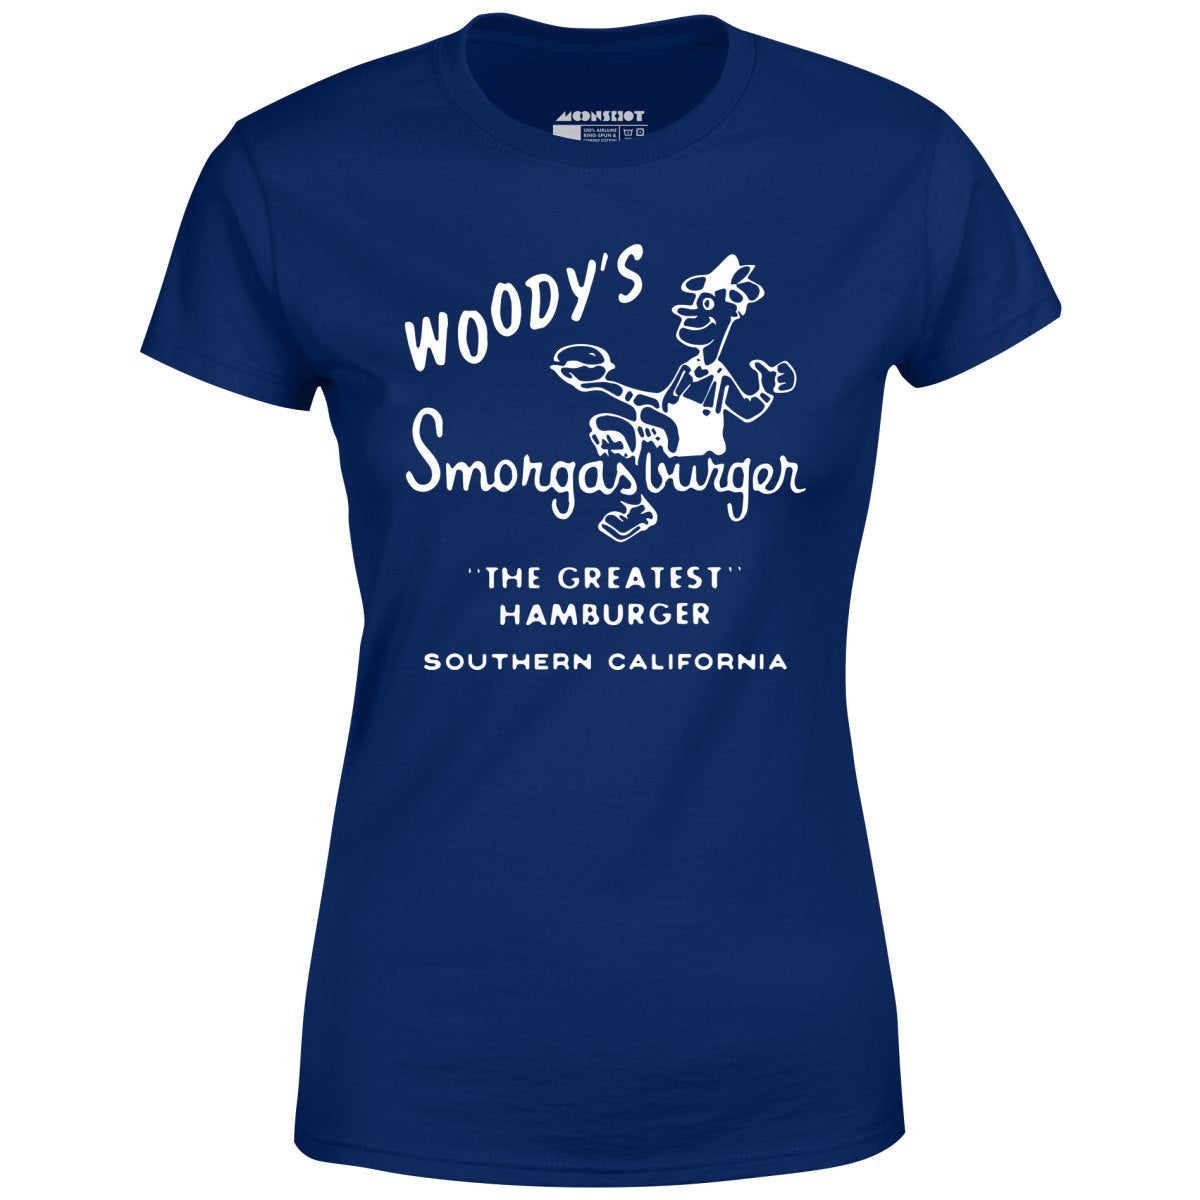 Woody's Smorgasburger - California - Vintage Restaurant - Women's T-Shirt